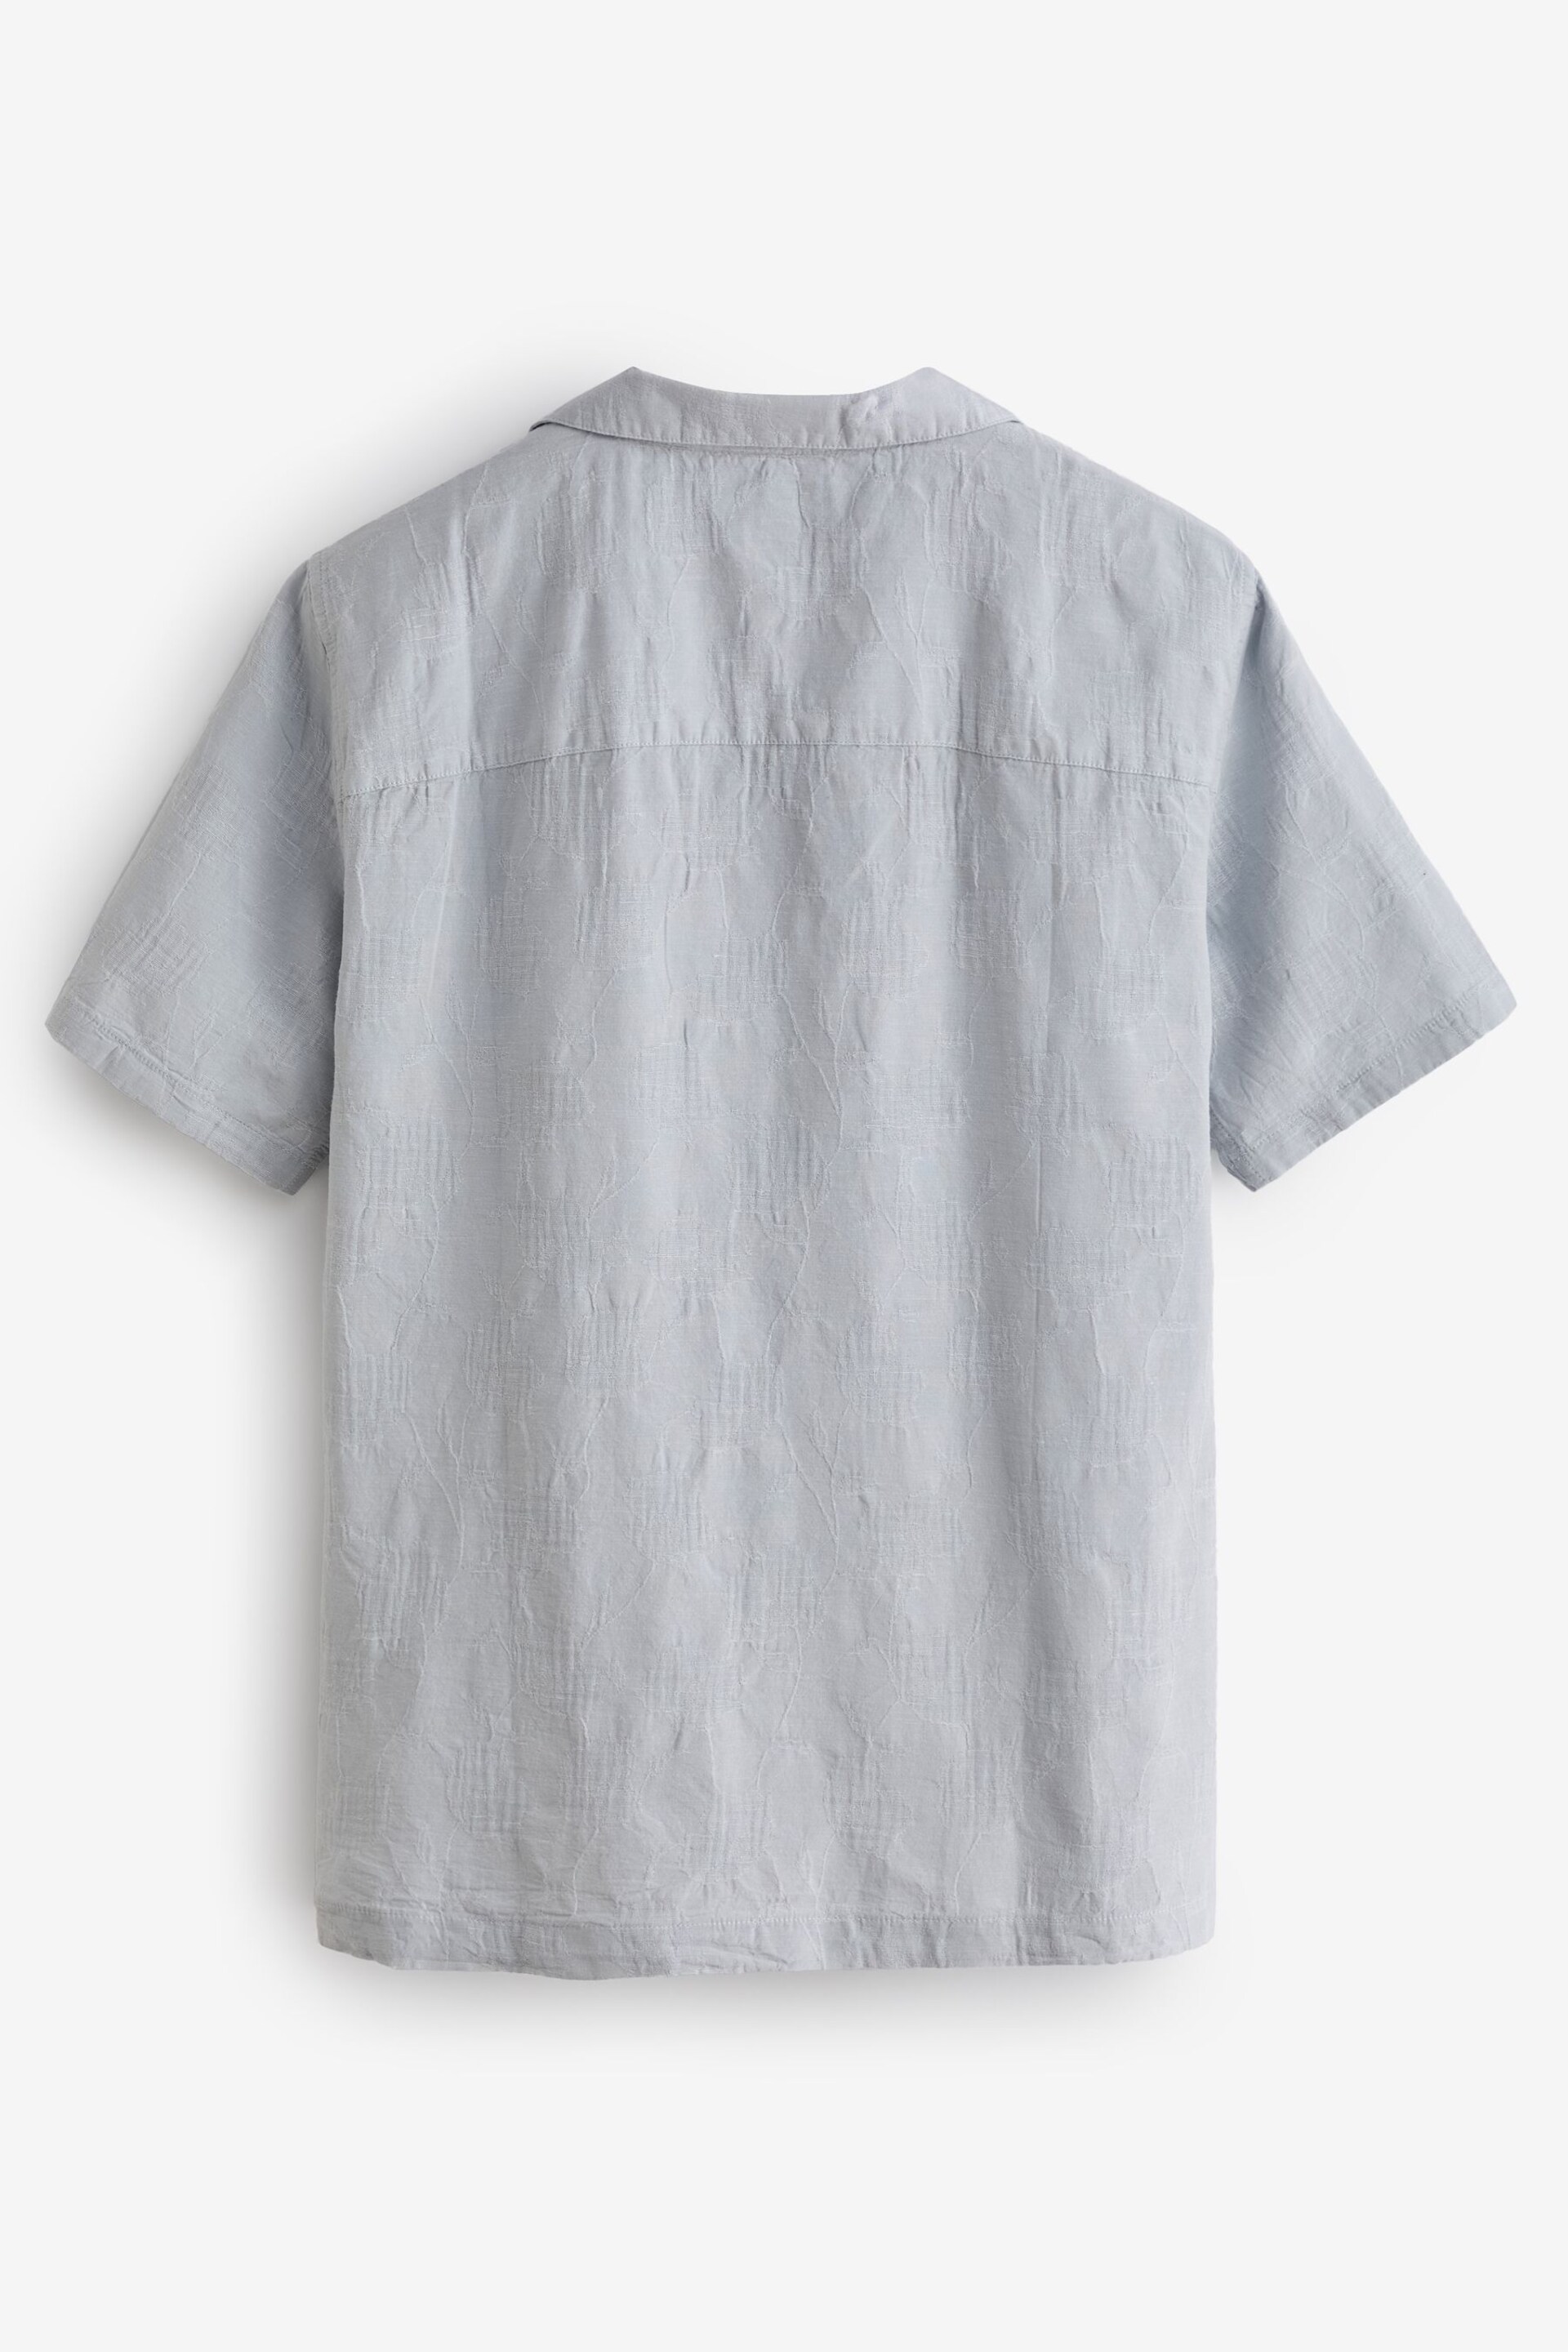 Gap Grey Jacquard Resort Shirt - Image 2 of 6